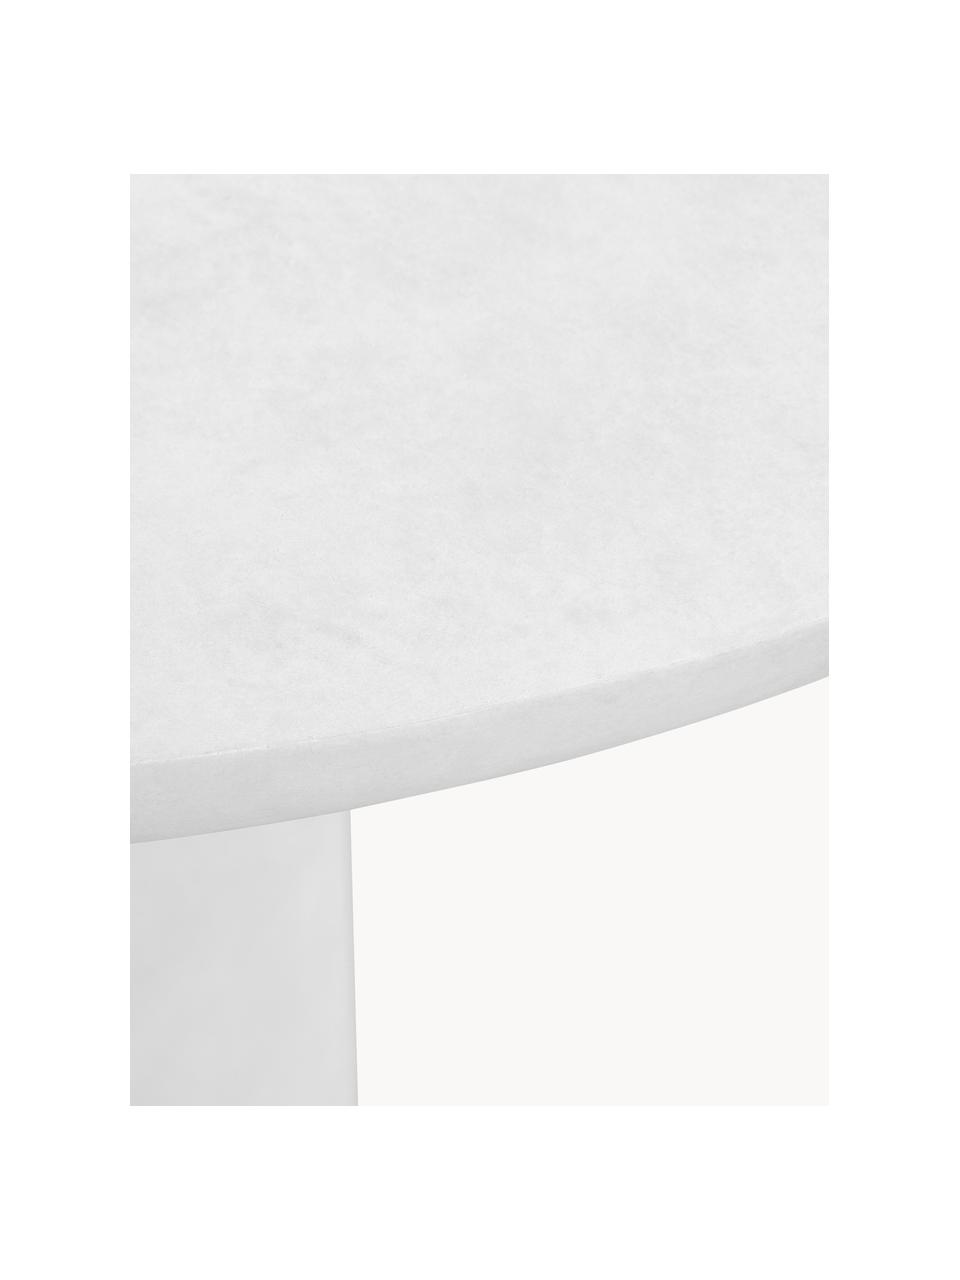 Mesa redonda para exterior Damon, Ø 100 cm, Arcilla, recubierta, Blanco Off White de aspecto cemento, Ø 100 x Al 76 cm